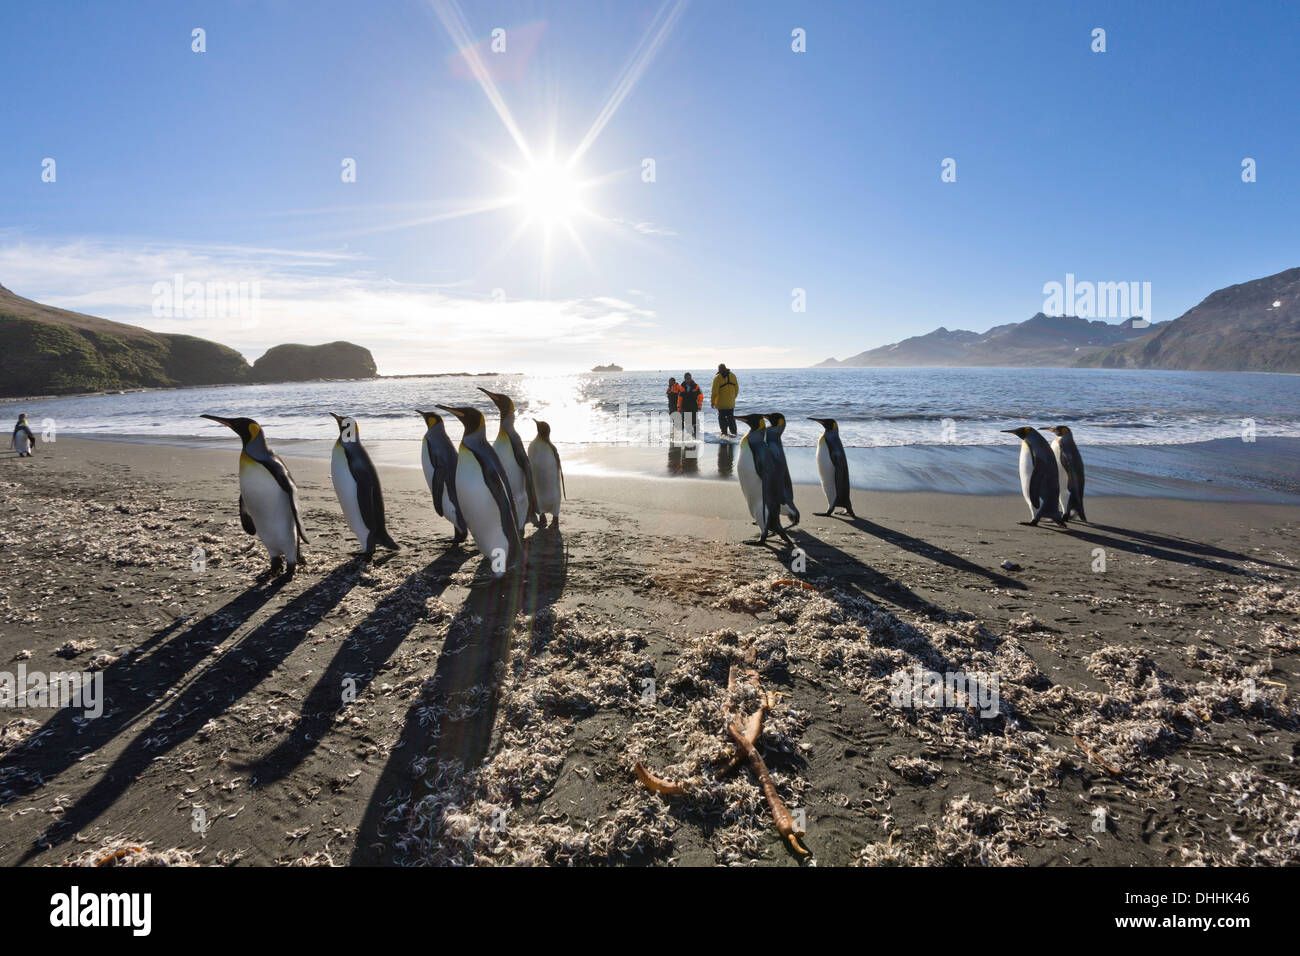 Il re dei pinguini, Aptenodytes patagonicus, Baia di St Andrews, Georgia del Sud Antartide Foto Stock